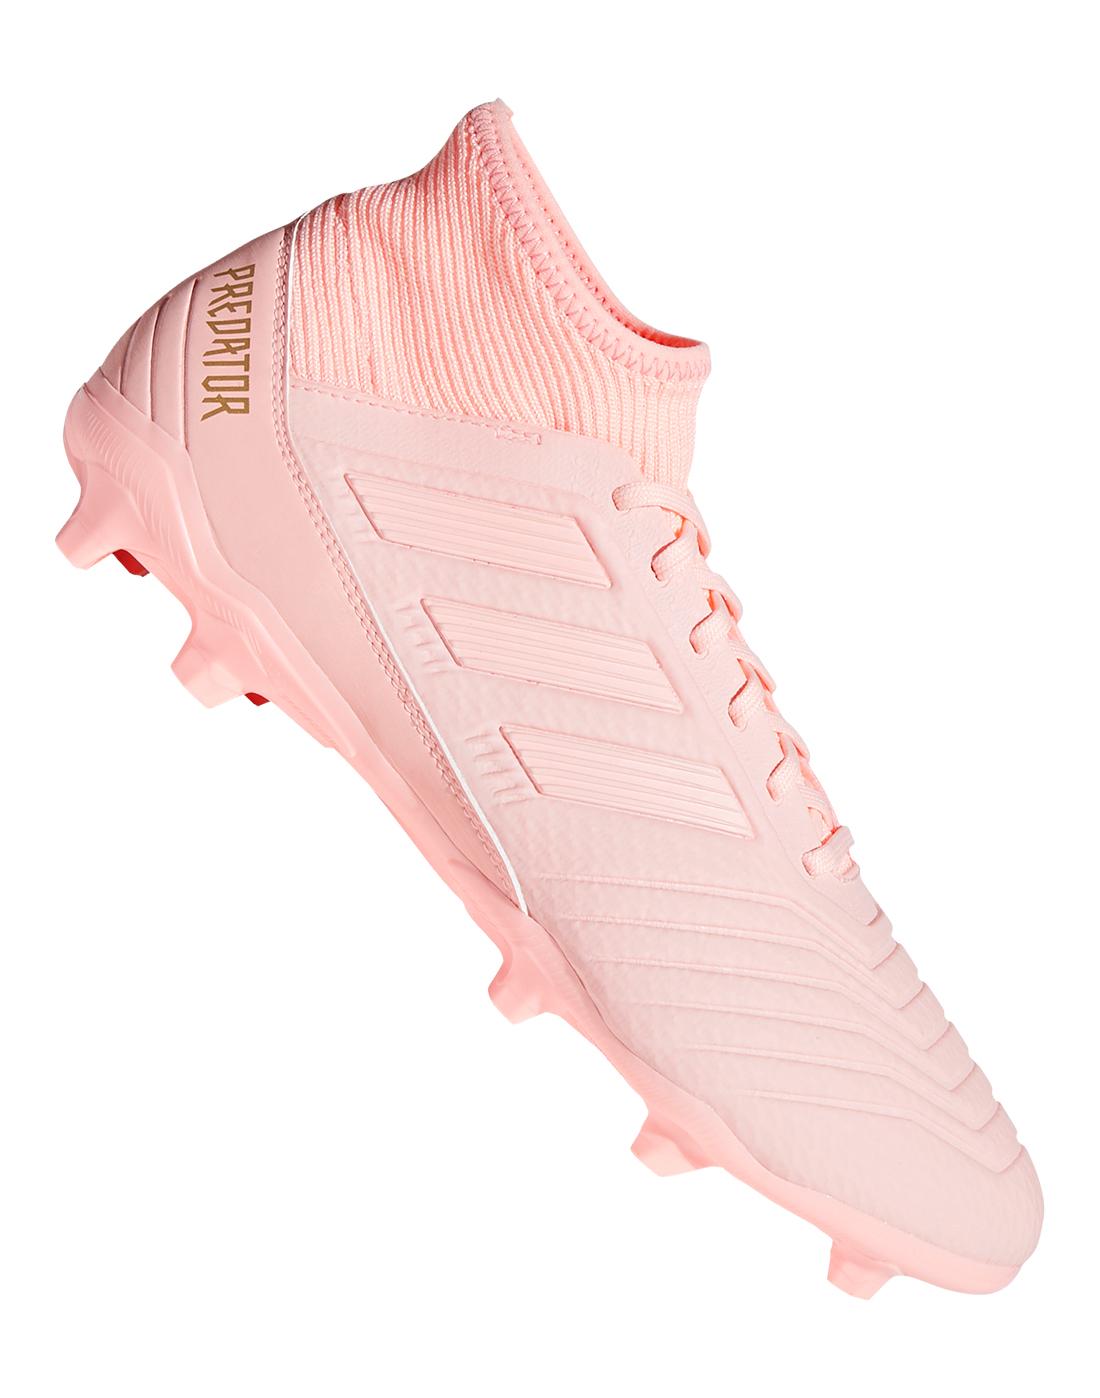 adidas predator 18.3 pink